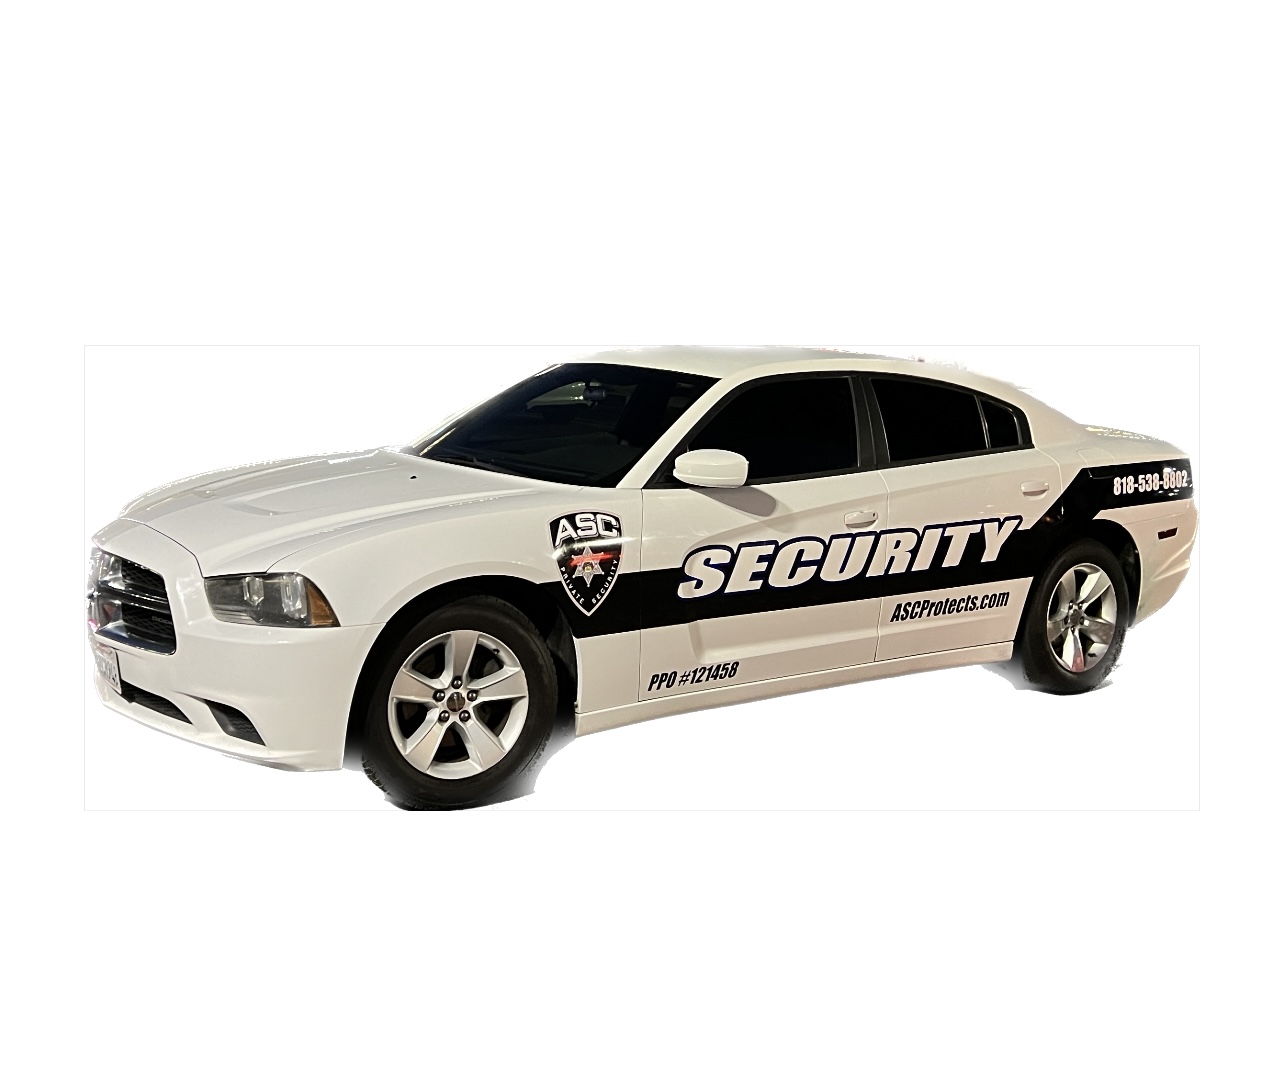 ASC Private Security mobile patrol car